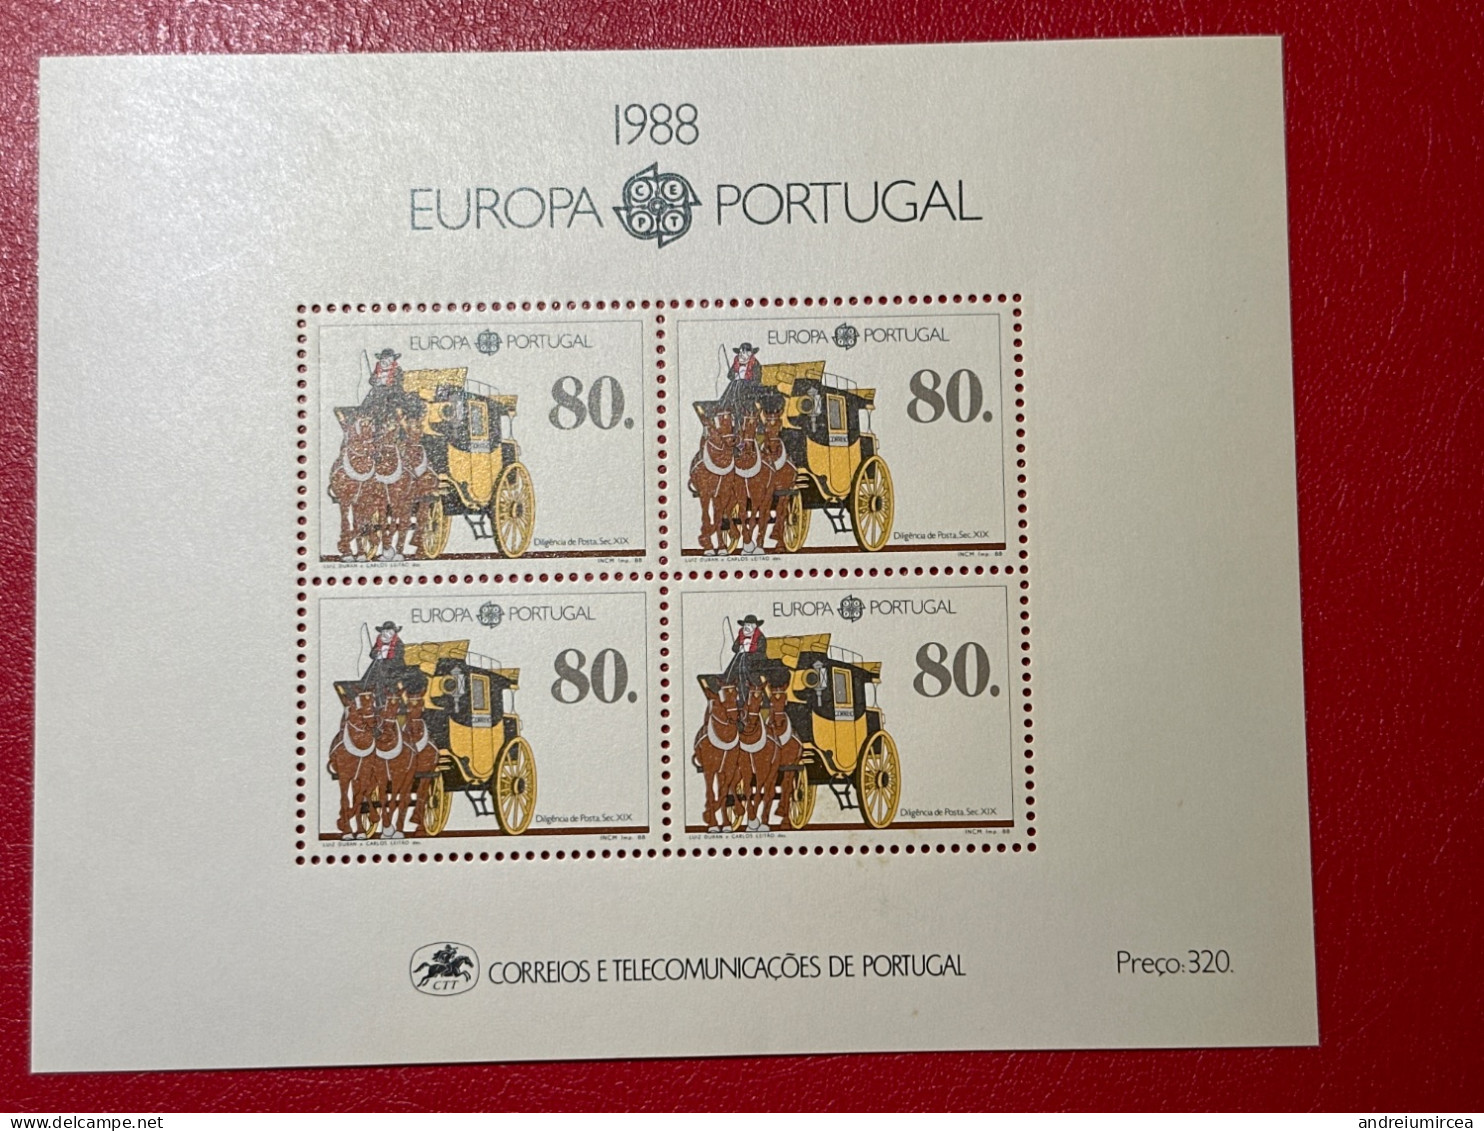 Europa CEPT 1988. MNH. PORTUGAL ACORES MADEIRA - 1988